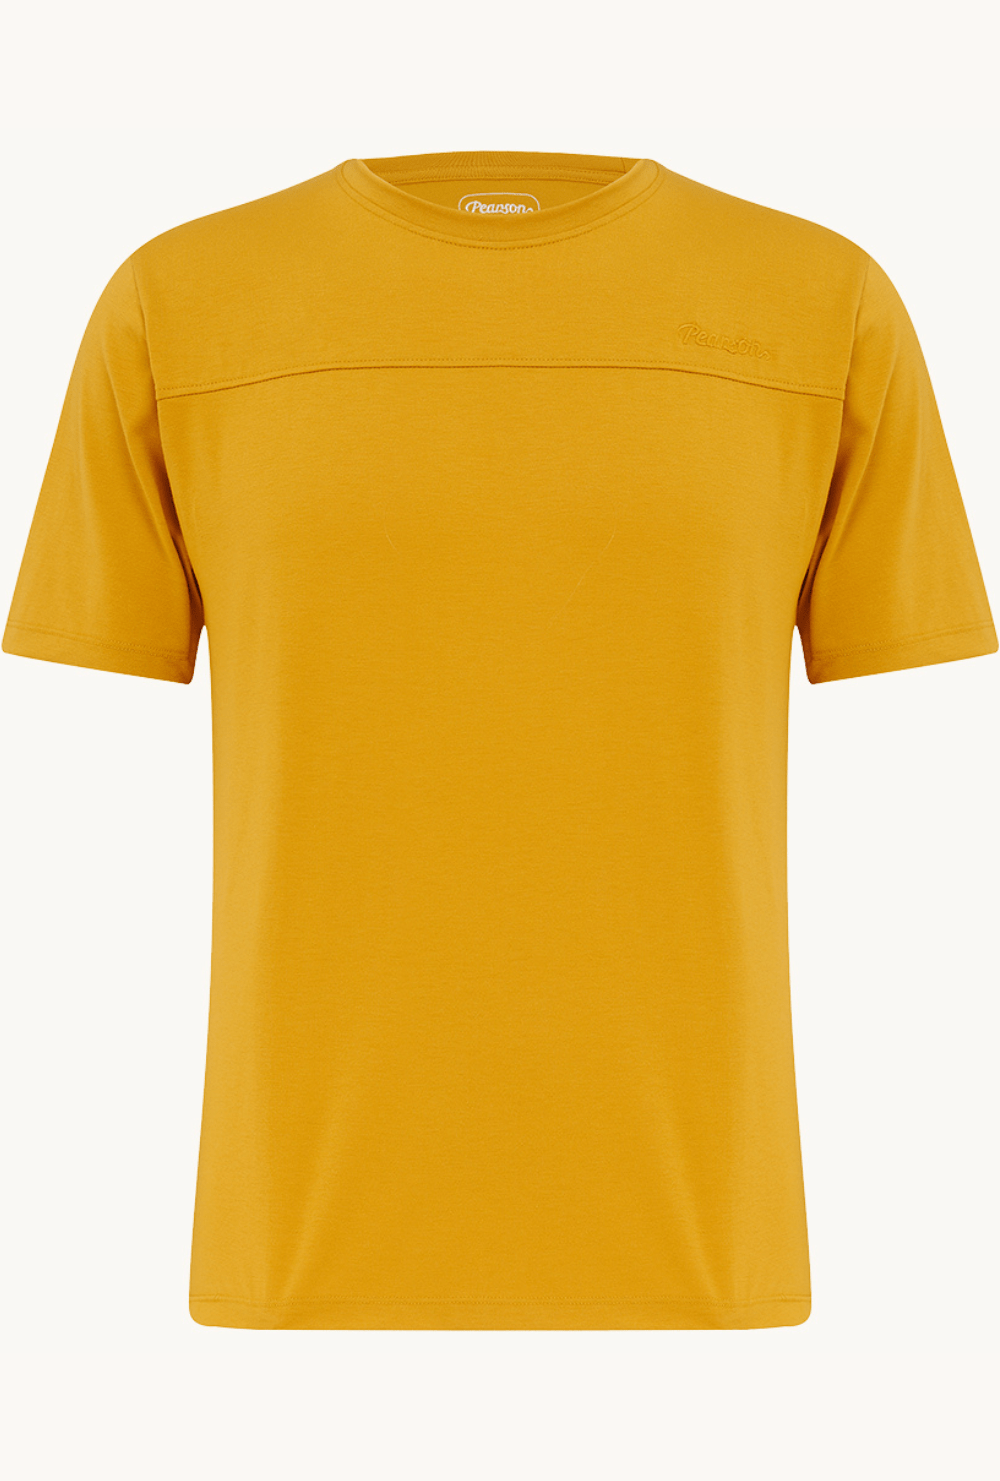 Pearson 1860  High DaysandHolidays - Cycling T-shirt Ochre  Ochre / Medium